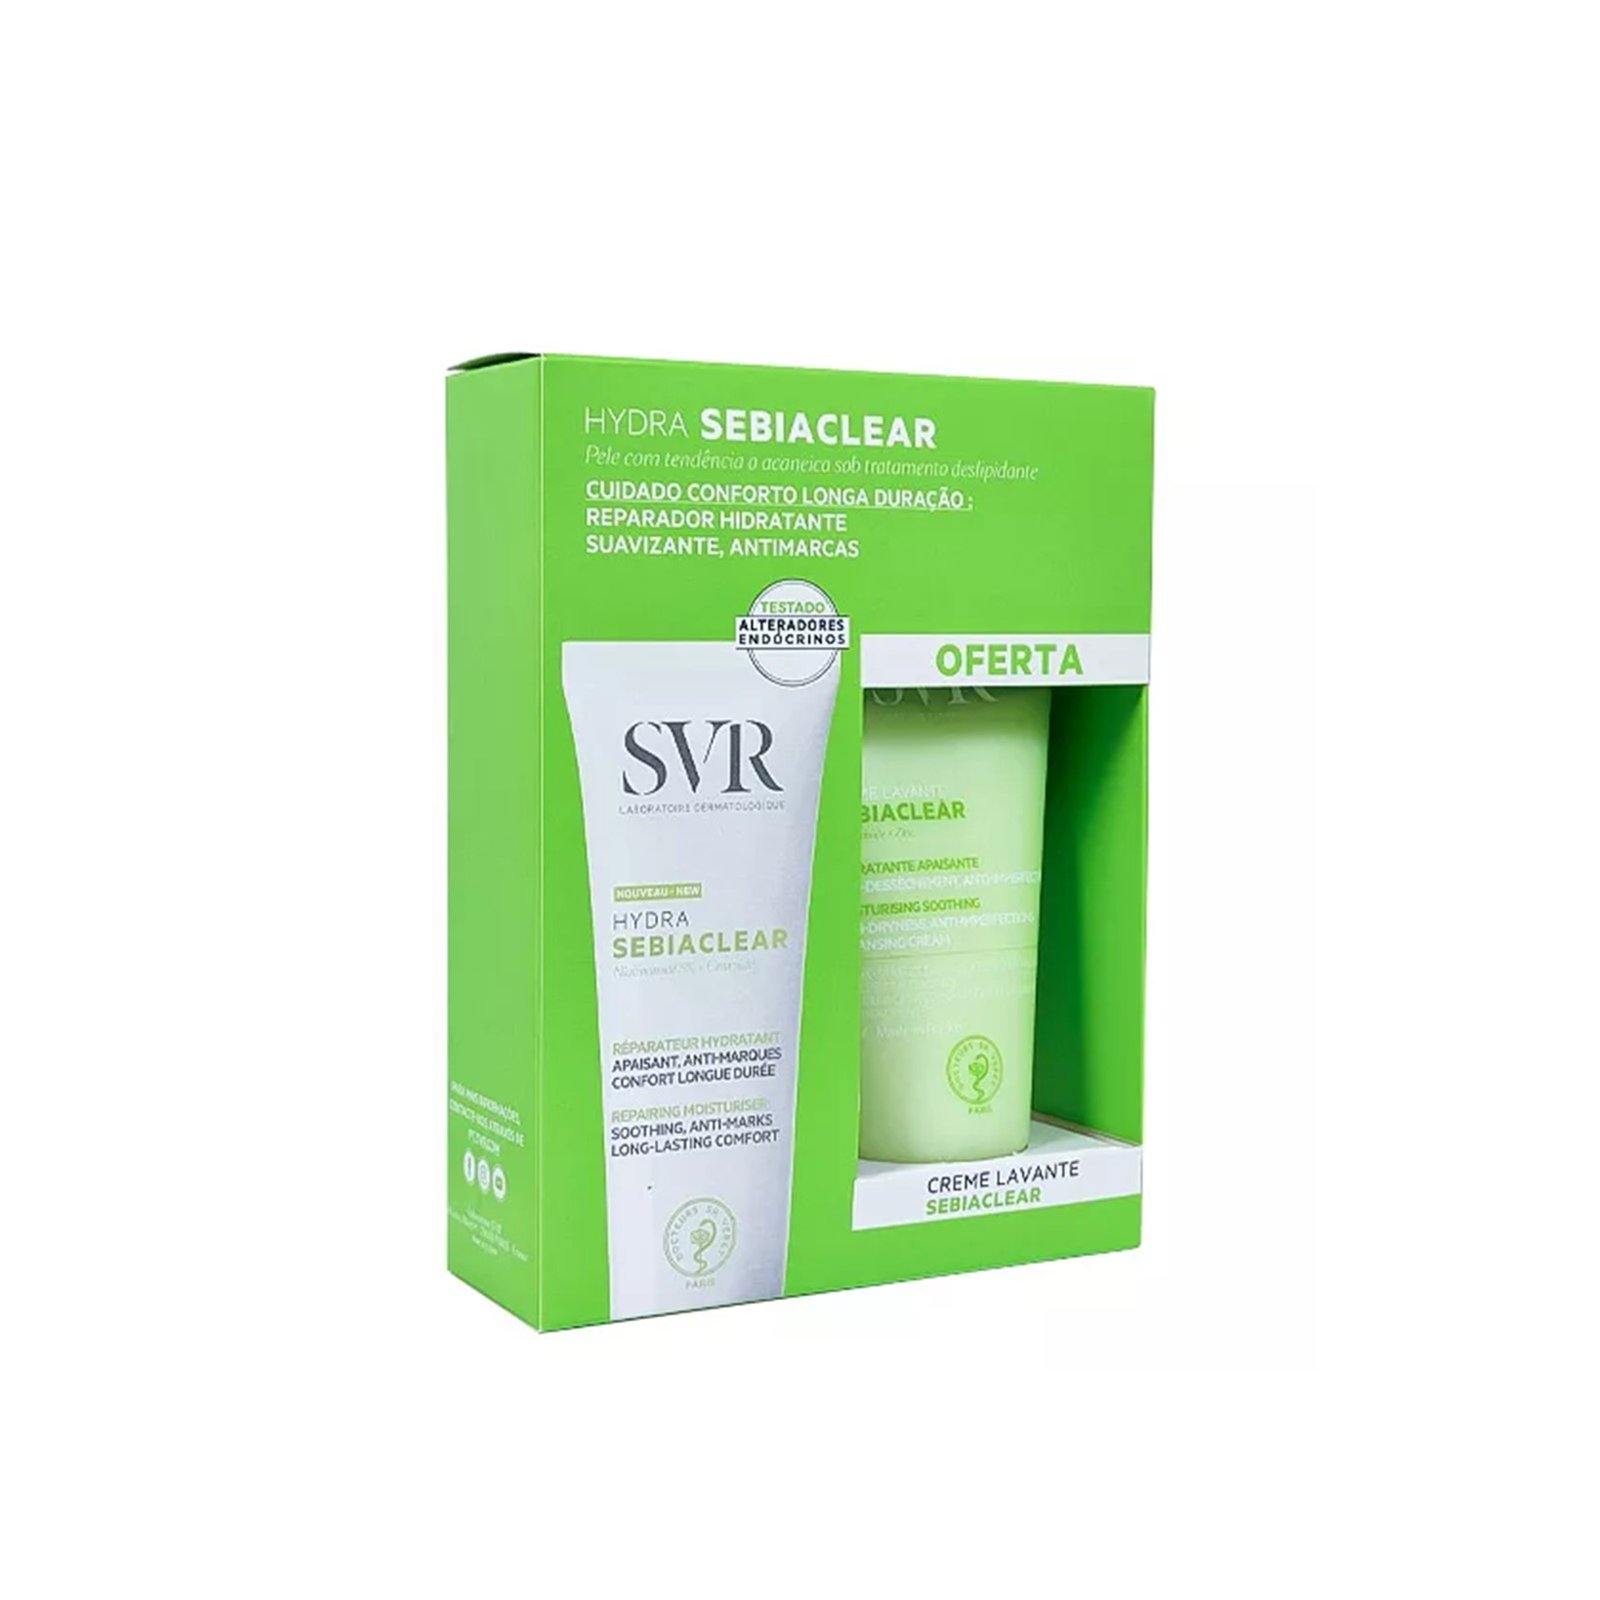 SVR Sebiaclear Hydra Repairing Moisturizer 40ml + Cleansing Cream 55ml (1.35 fl oz + 1.85 fl oz)